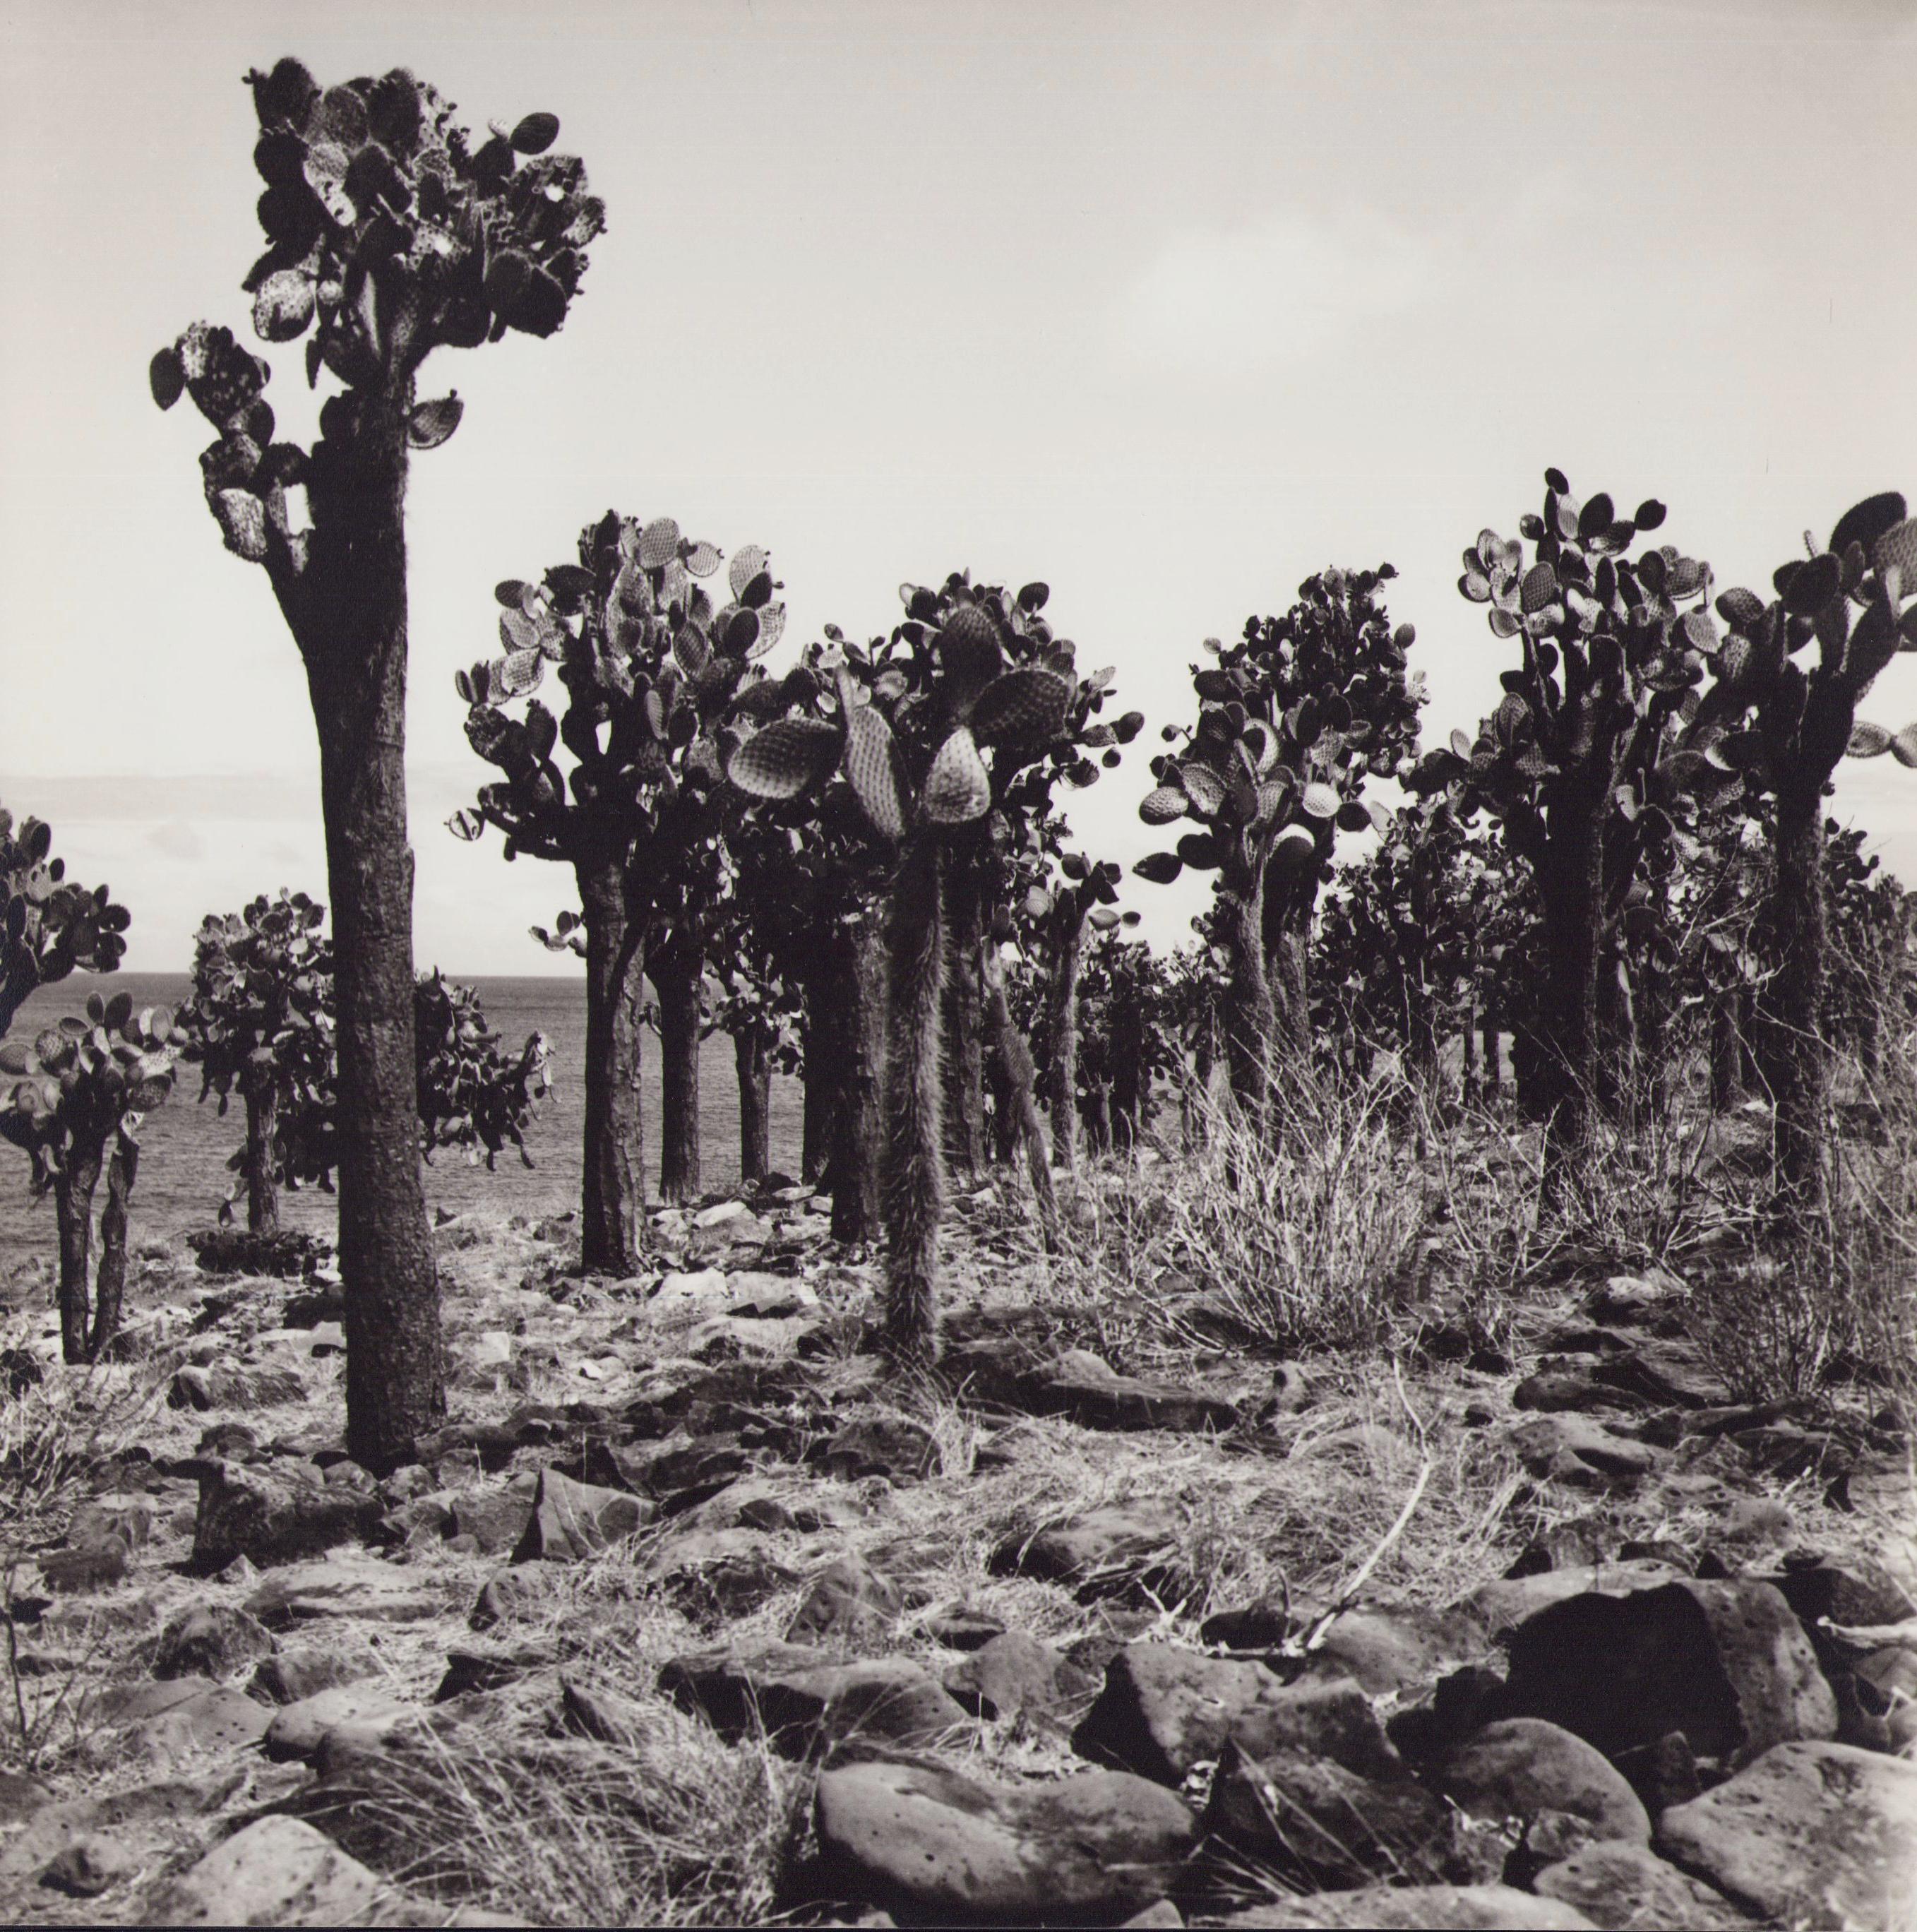 Hanna Seidel Portrait Photograph - Galápagos, Cactus-Forest, Black and White Photography, 1960s, 23, 2 x 23, 2 cm